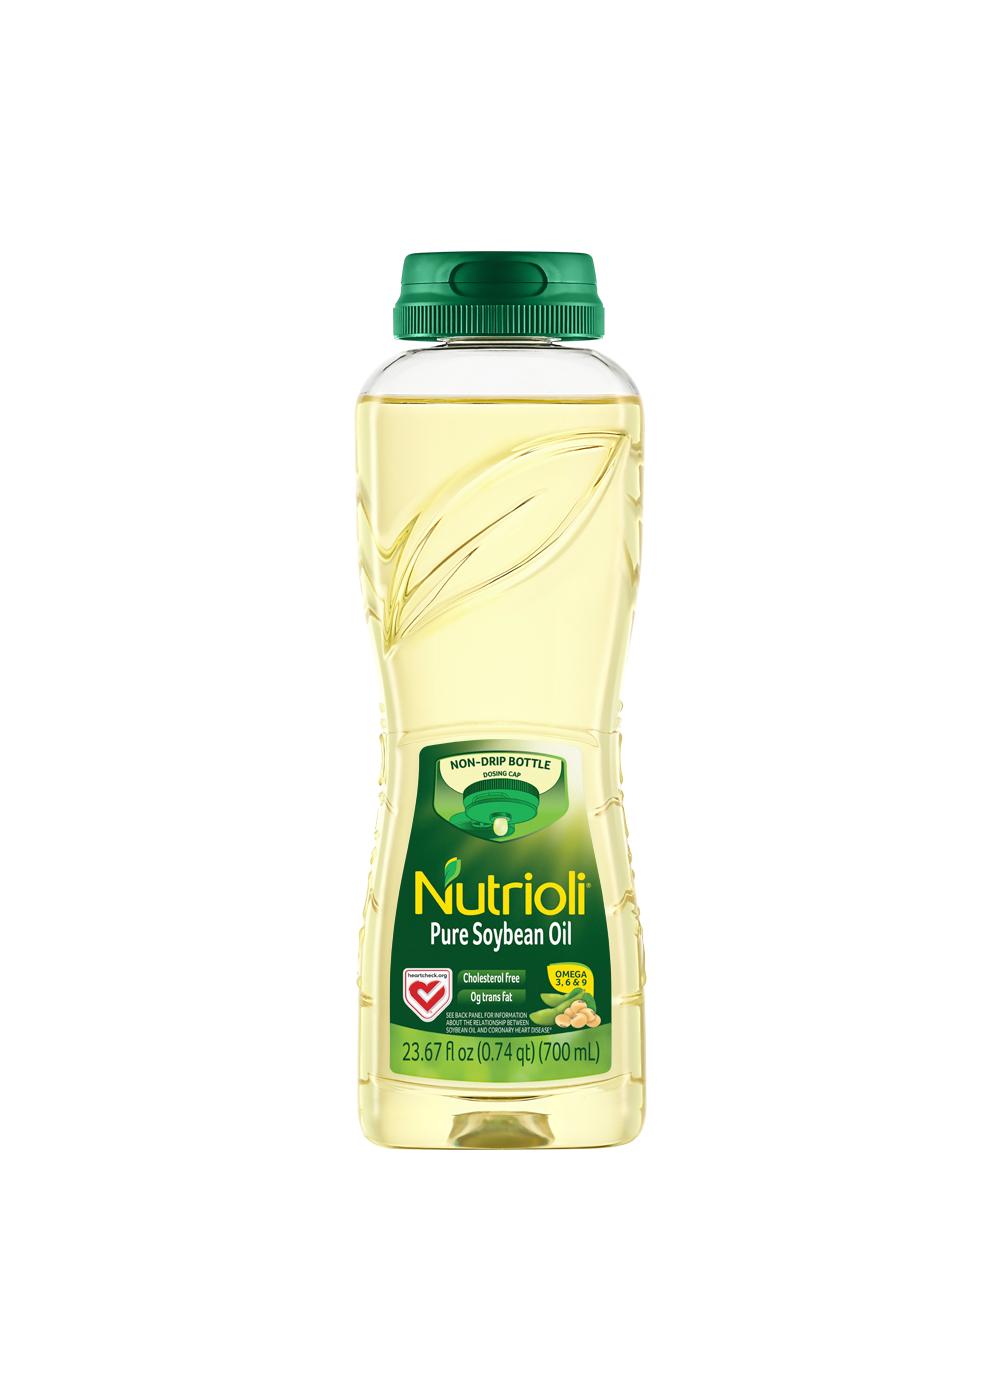 Nutrioli Pure Soybean Oil; image 1 of 2